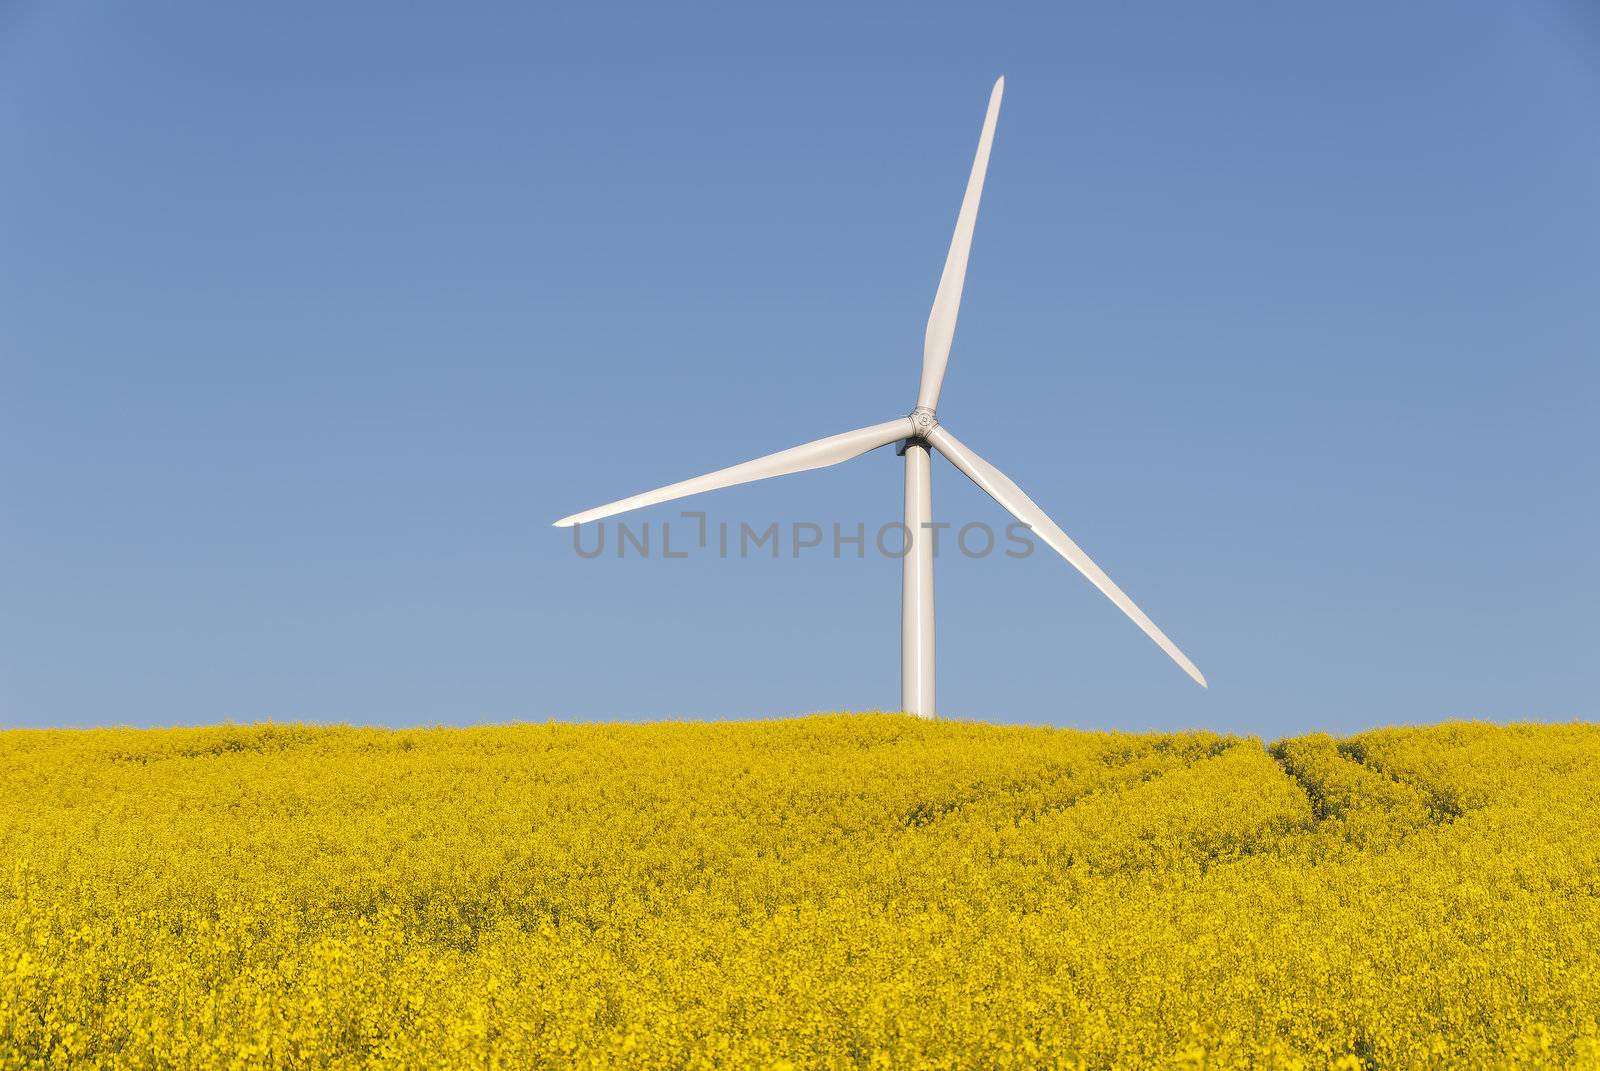 a wind turbine in a rapesseed field